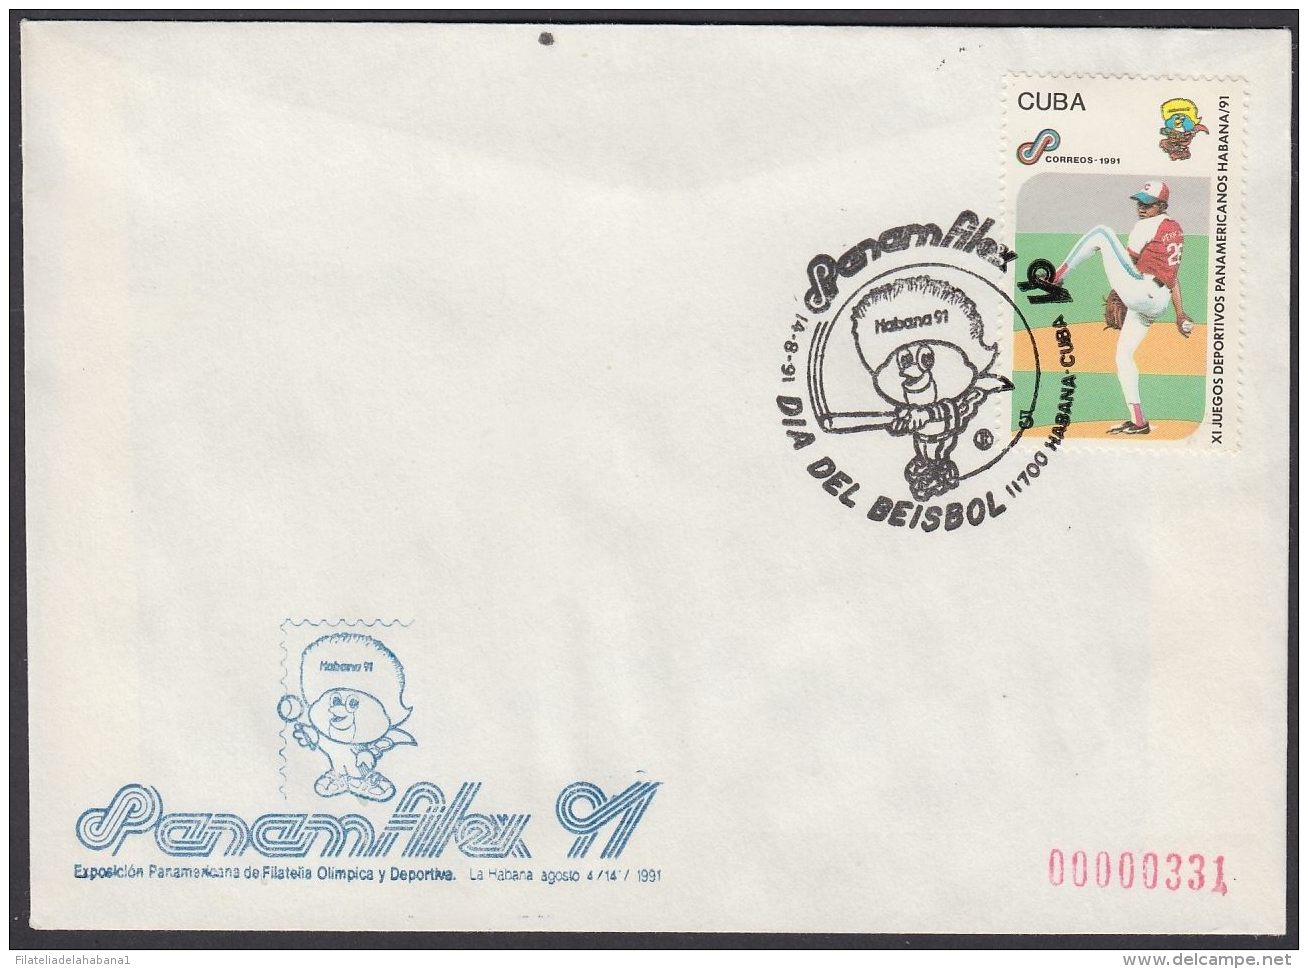 1991-CE-40 CUBA 1991 SPECIAL CANCEL. PANAMFILEX EXPO. DIA DEL BEISBOL. BASEBALL. - Lettres & Documents